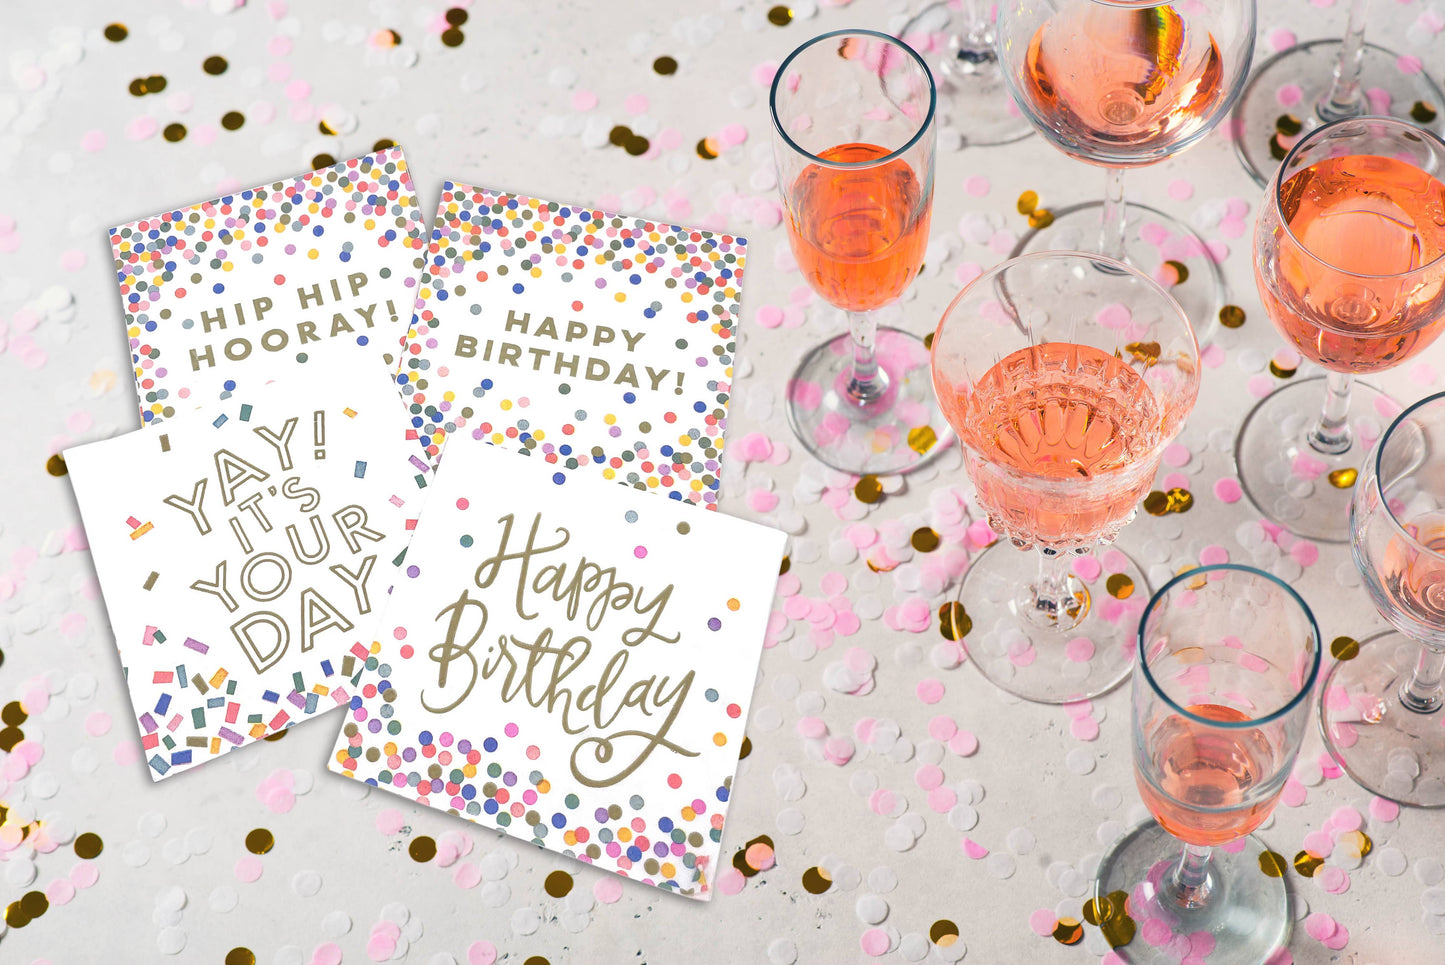 Cocktail Napkins: Happy Birthday! Confetti